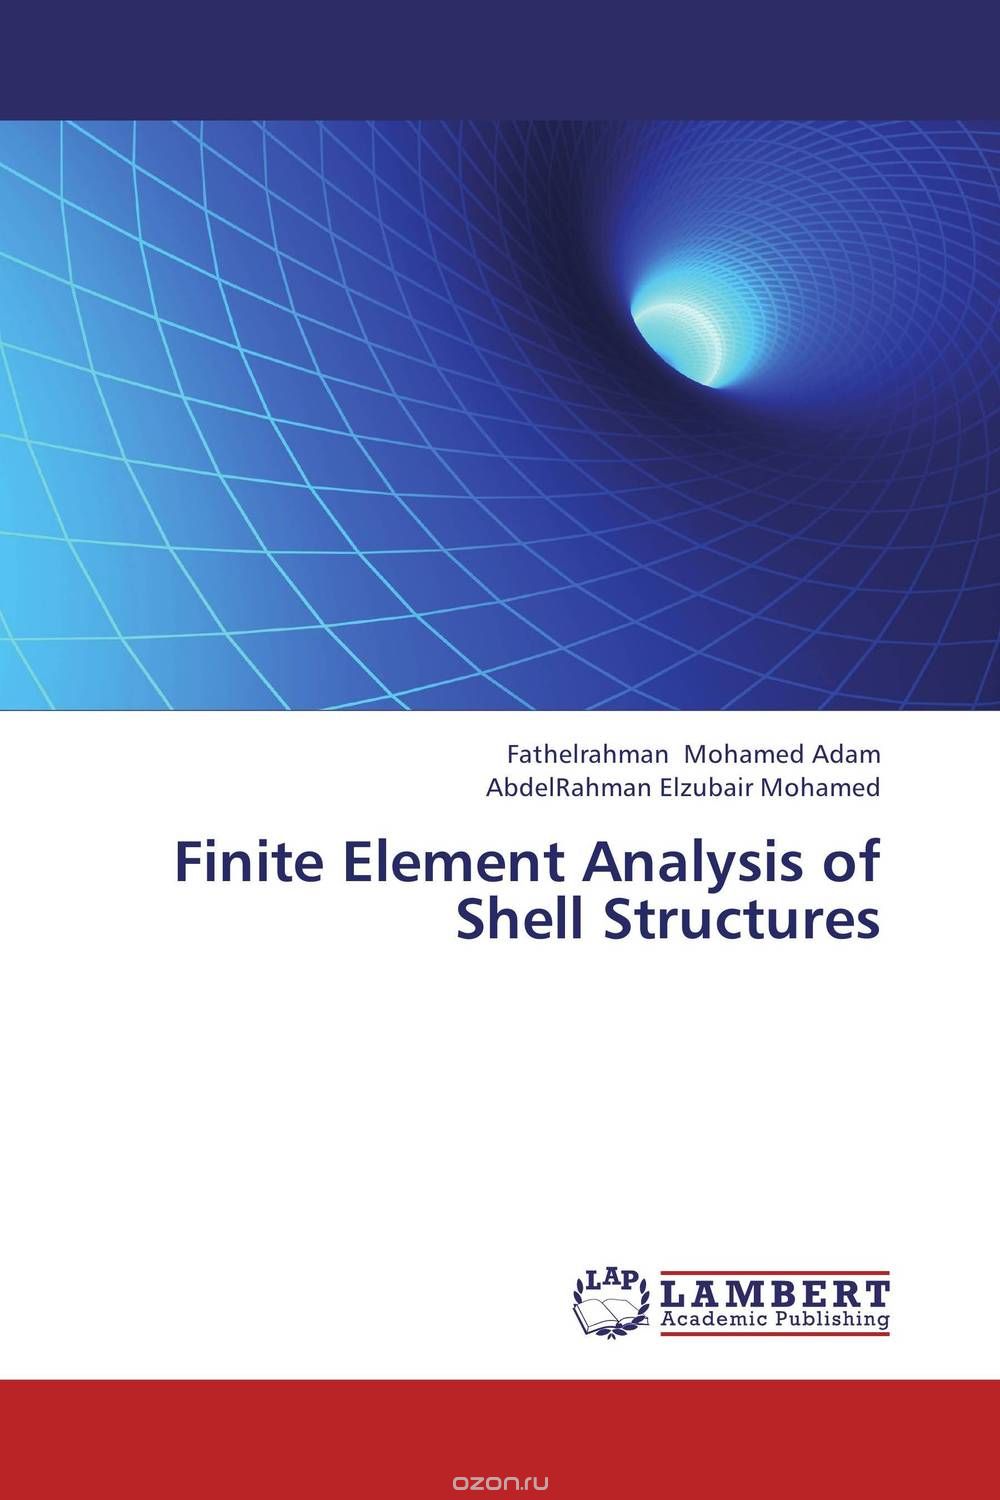 Скачать книгу "Finite Element Analysis of Shell Structures"